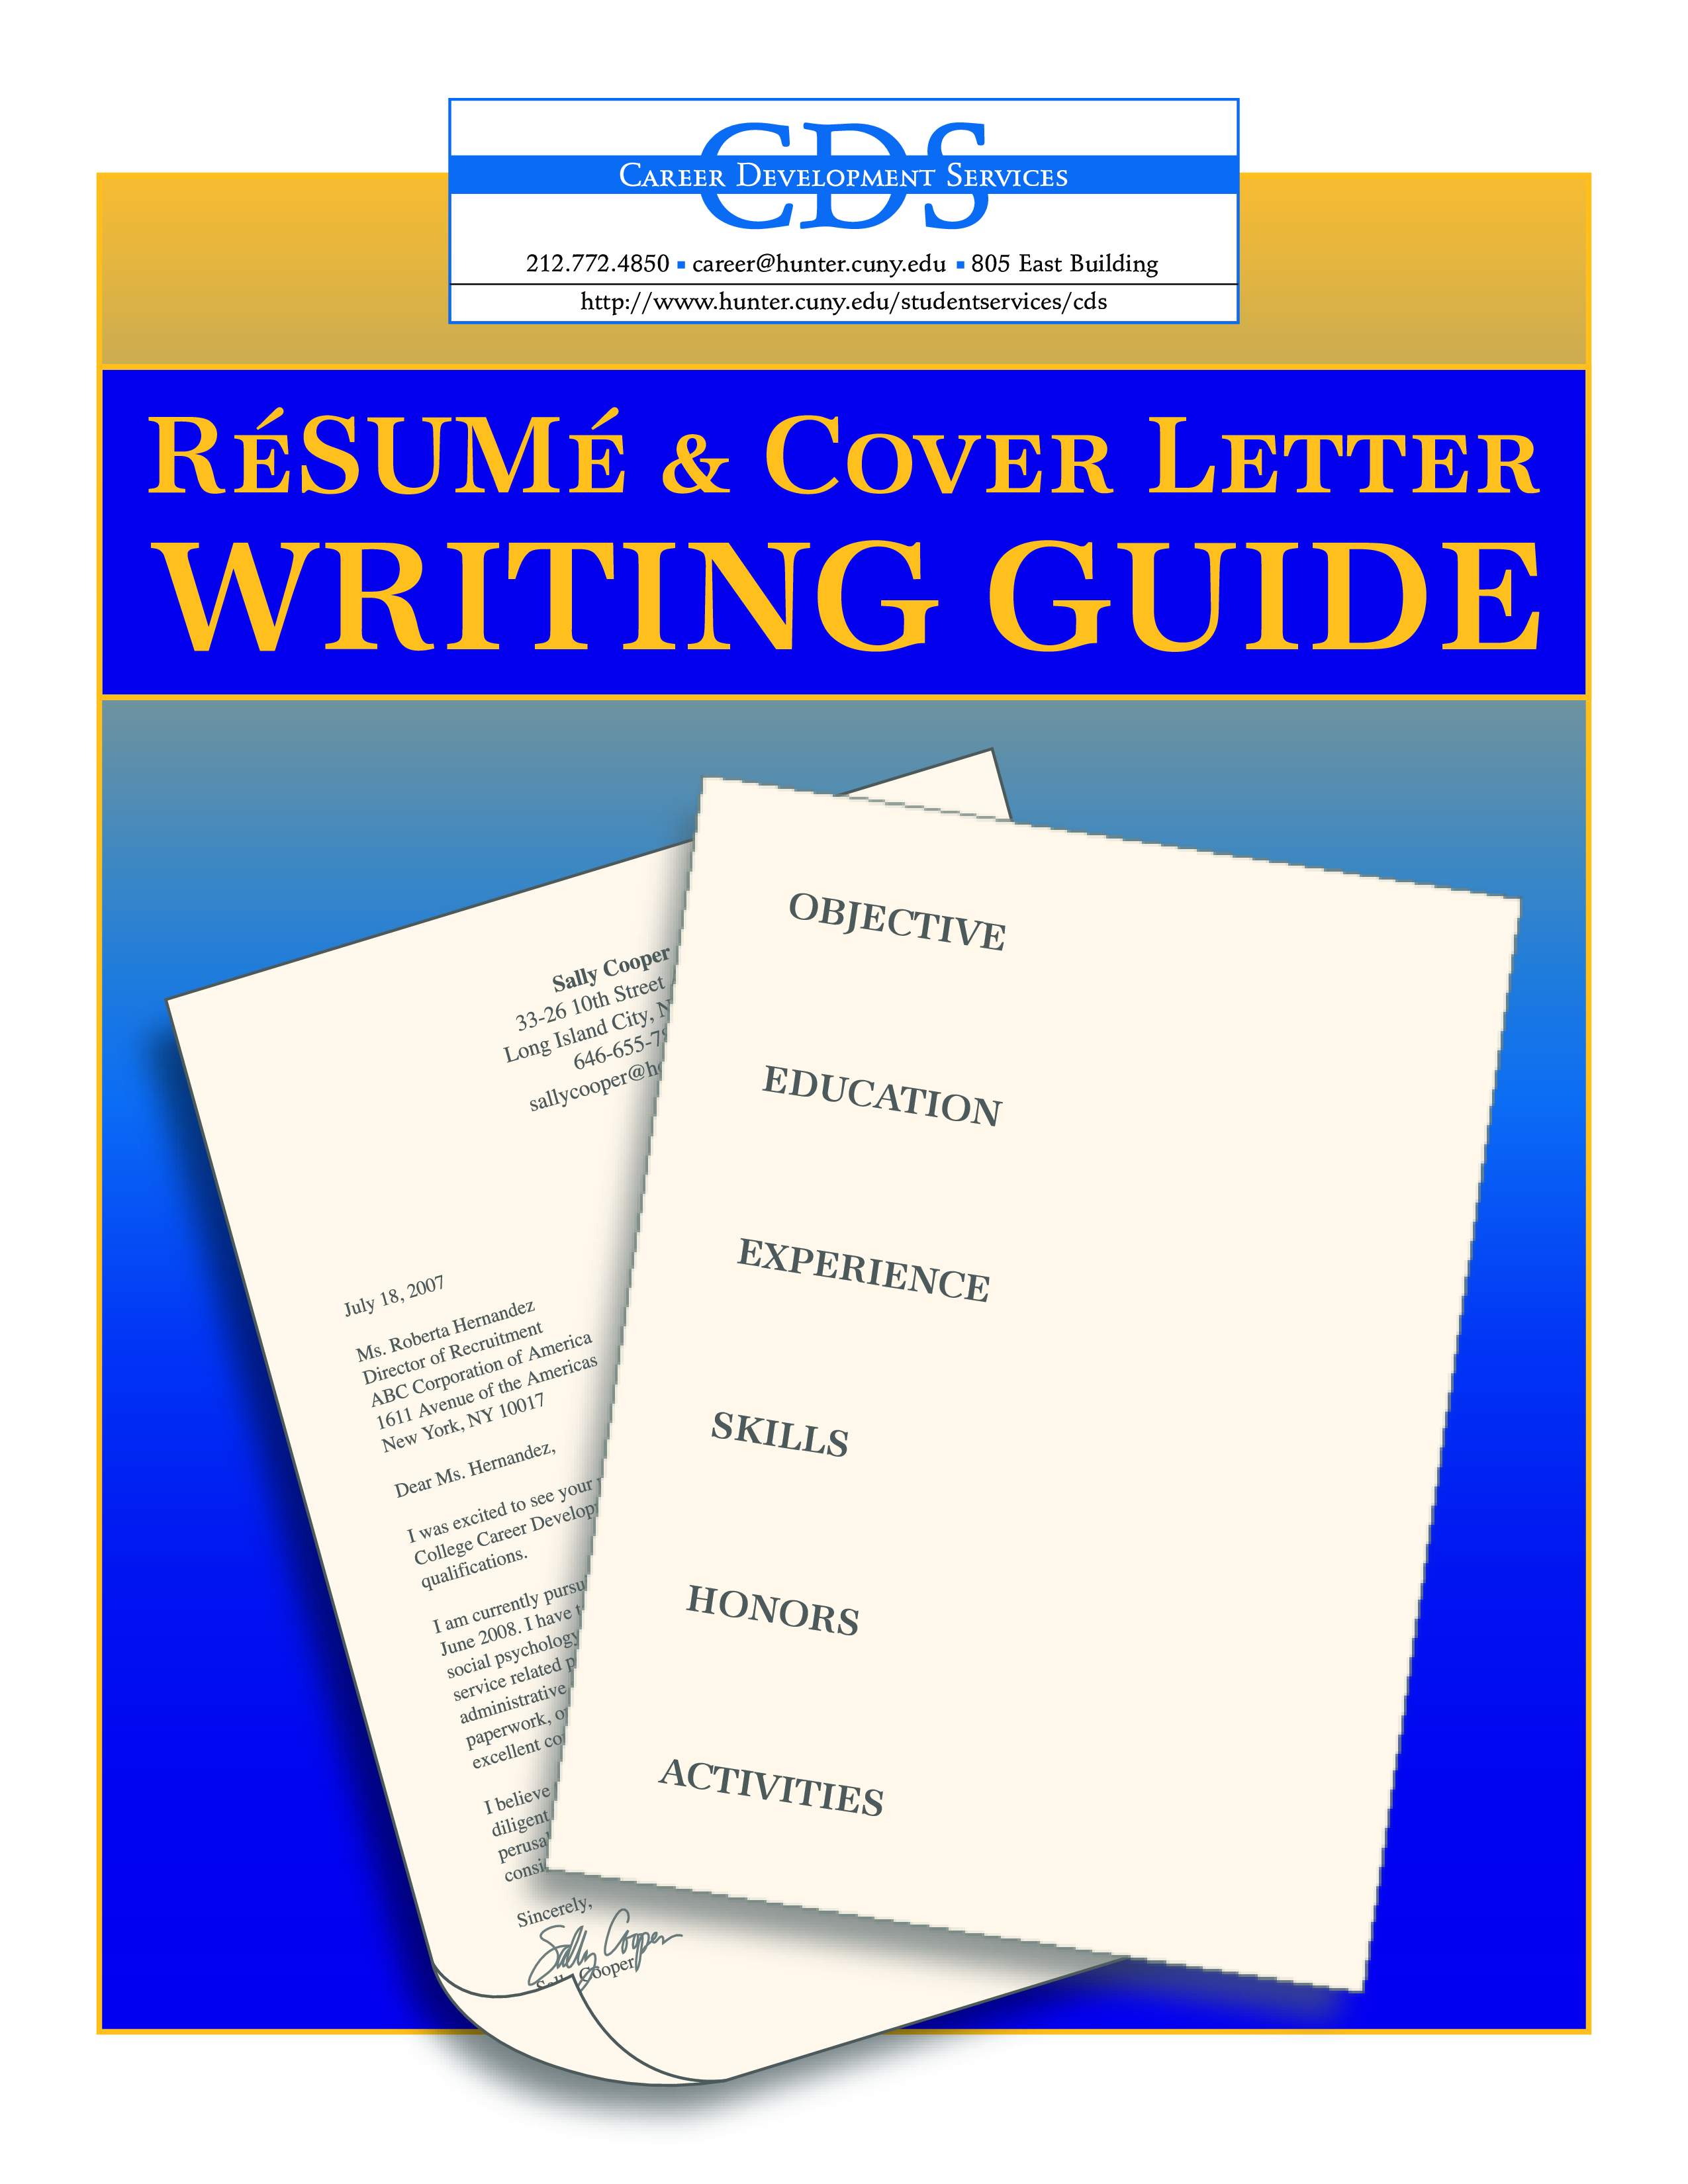 restaurant manager resume application cover letter template plantilla imagen principal